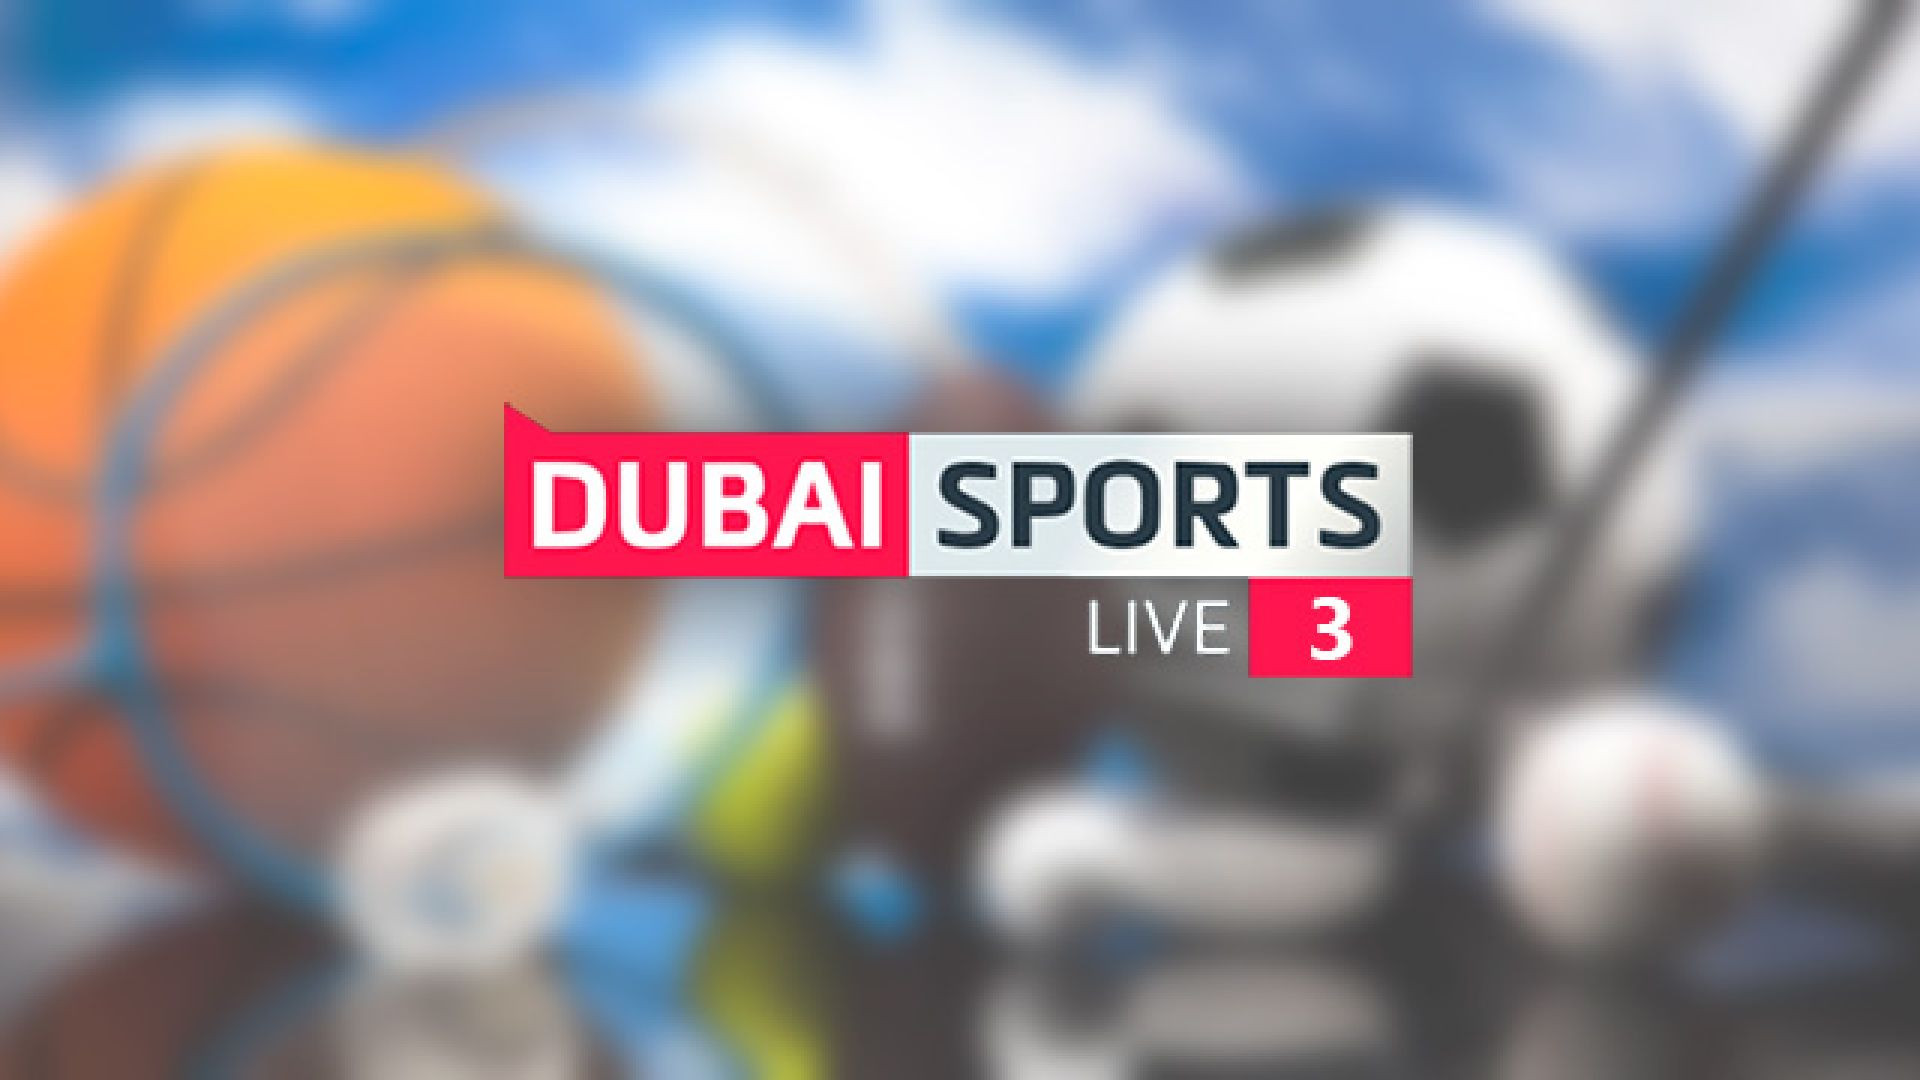 Dubai Sports live